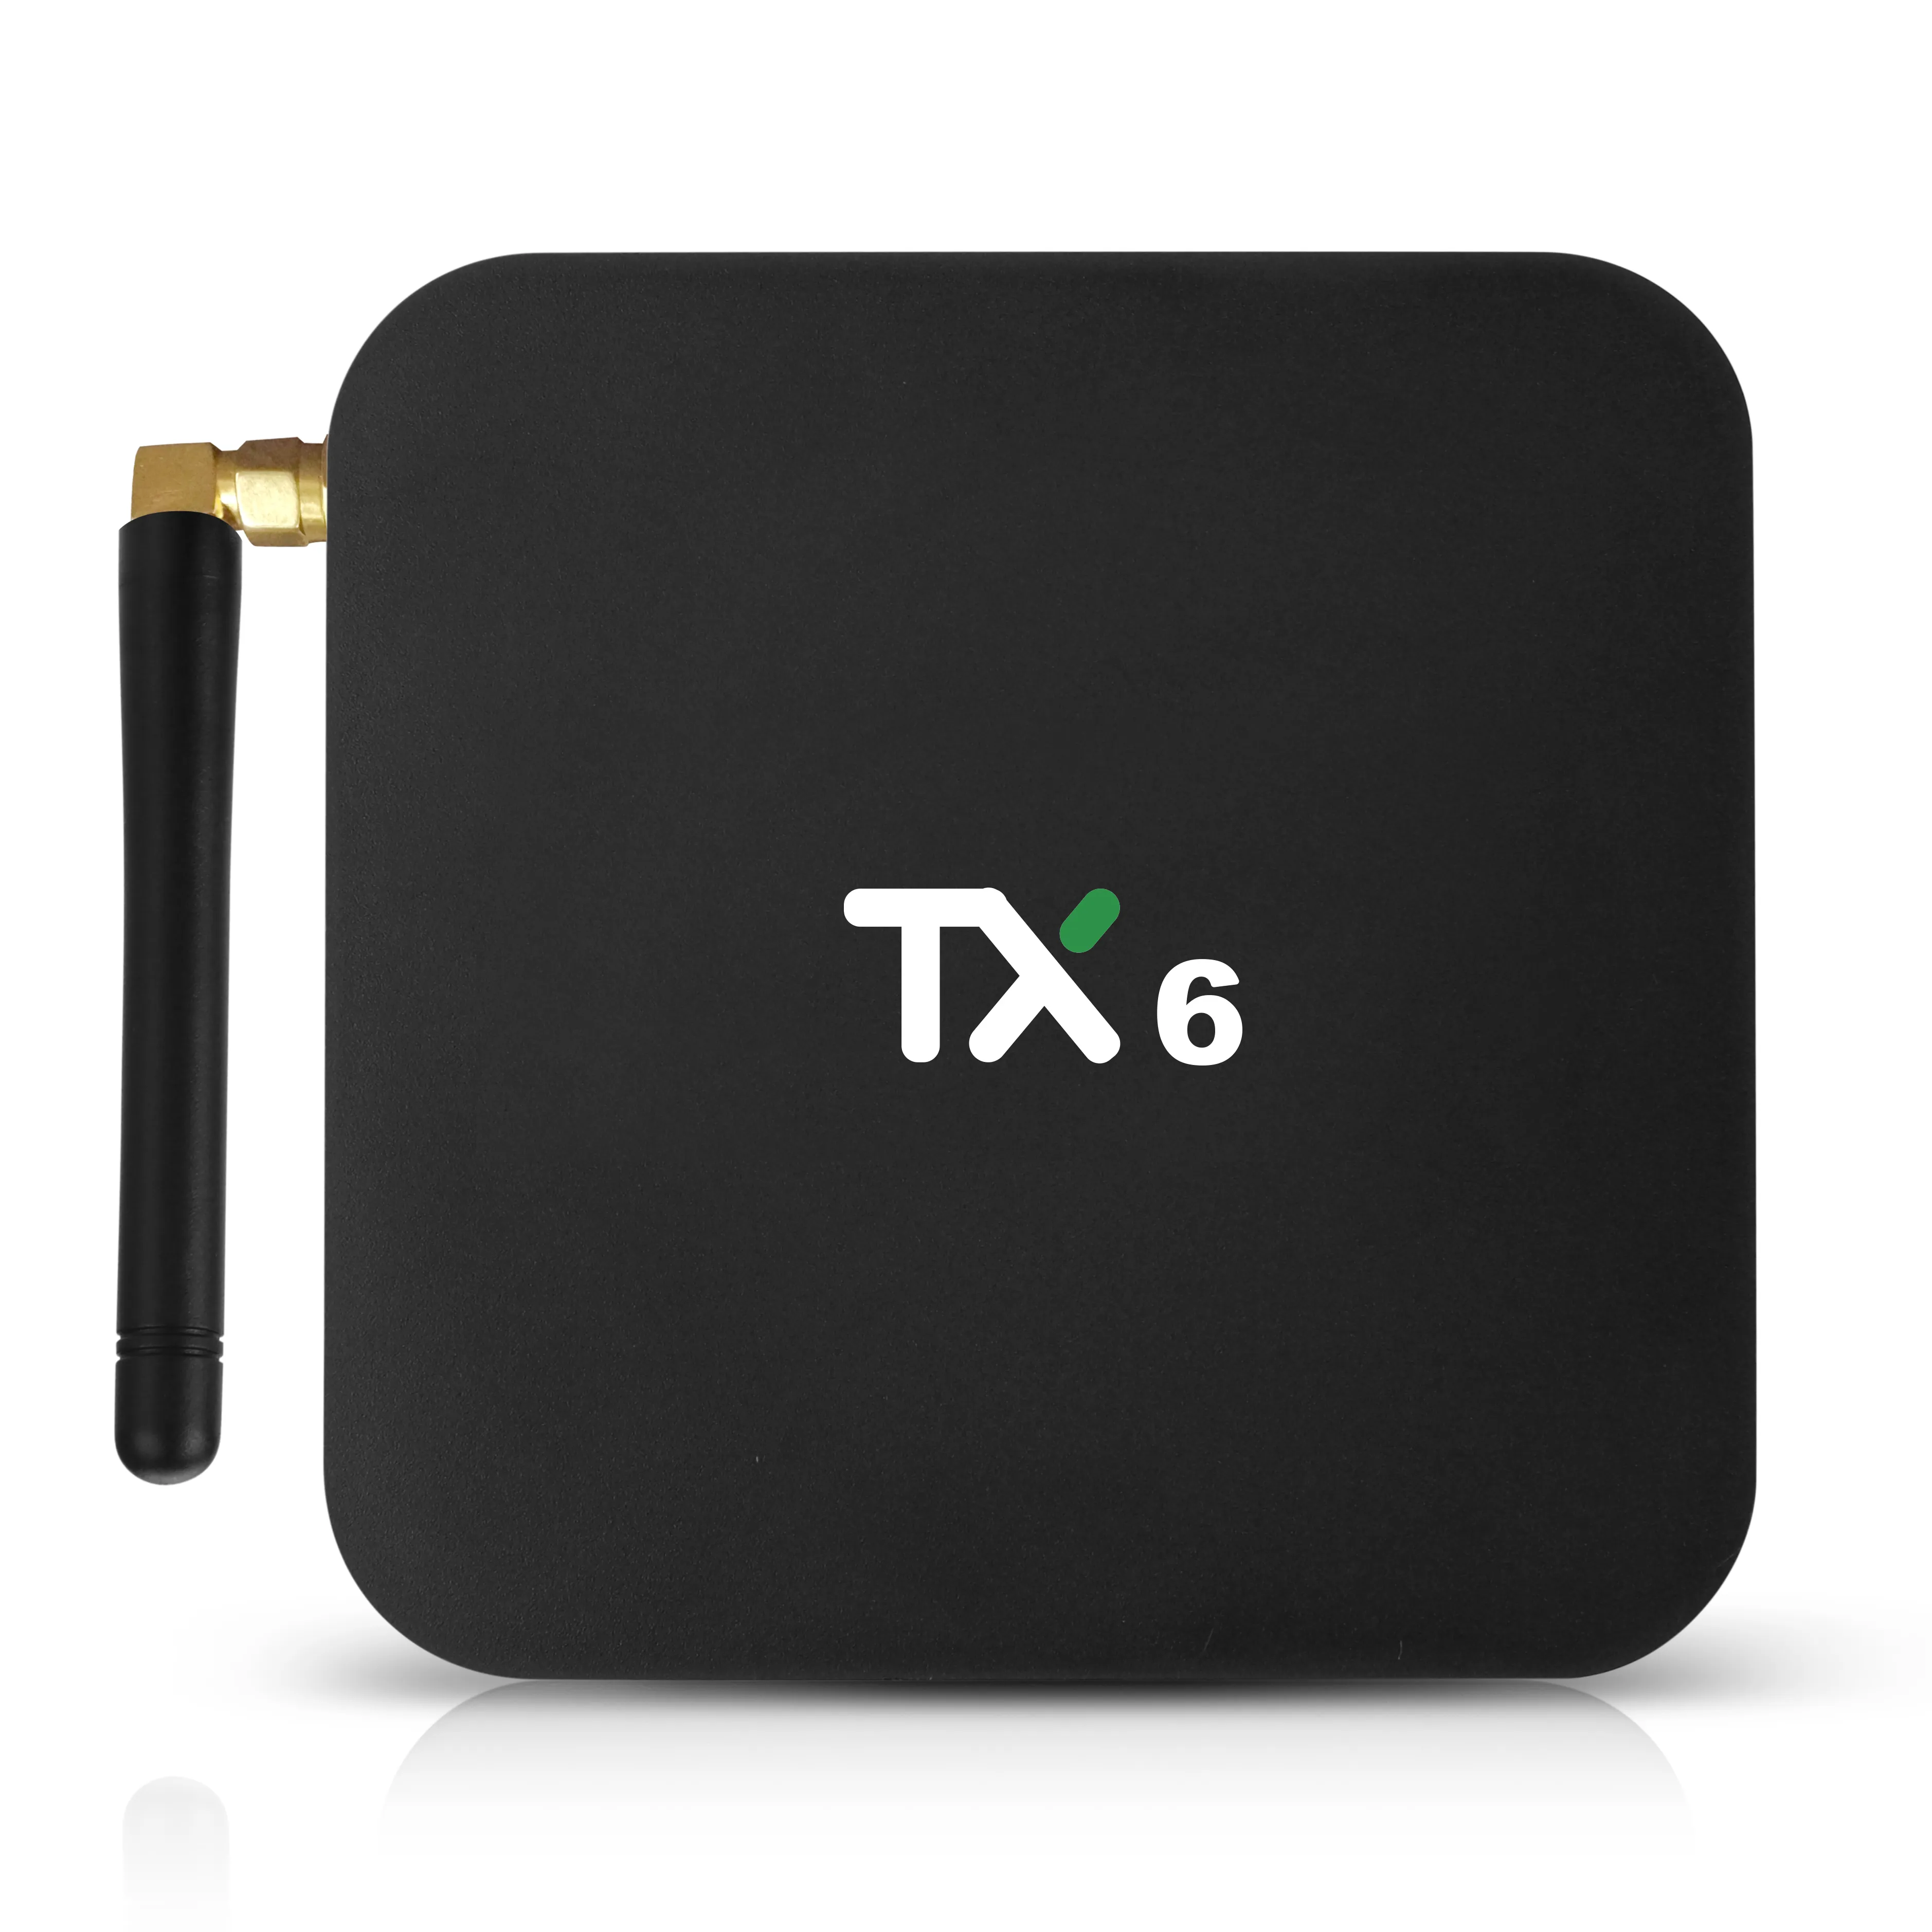 Android 9.0 Android TV Box Tanix TX6 TV box 2gb 16gb Dual WiFi TX6 4GB 64GB Internet Allwinner H6 Media Player